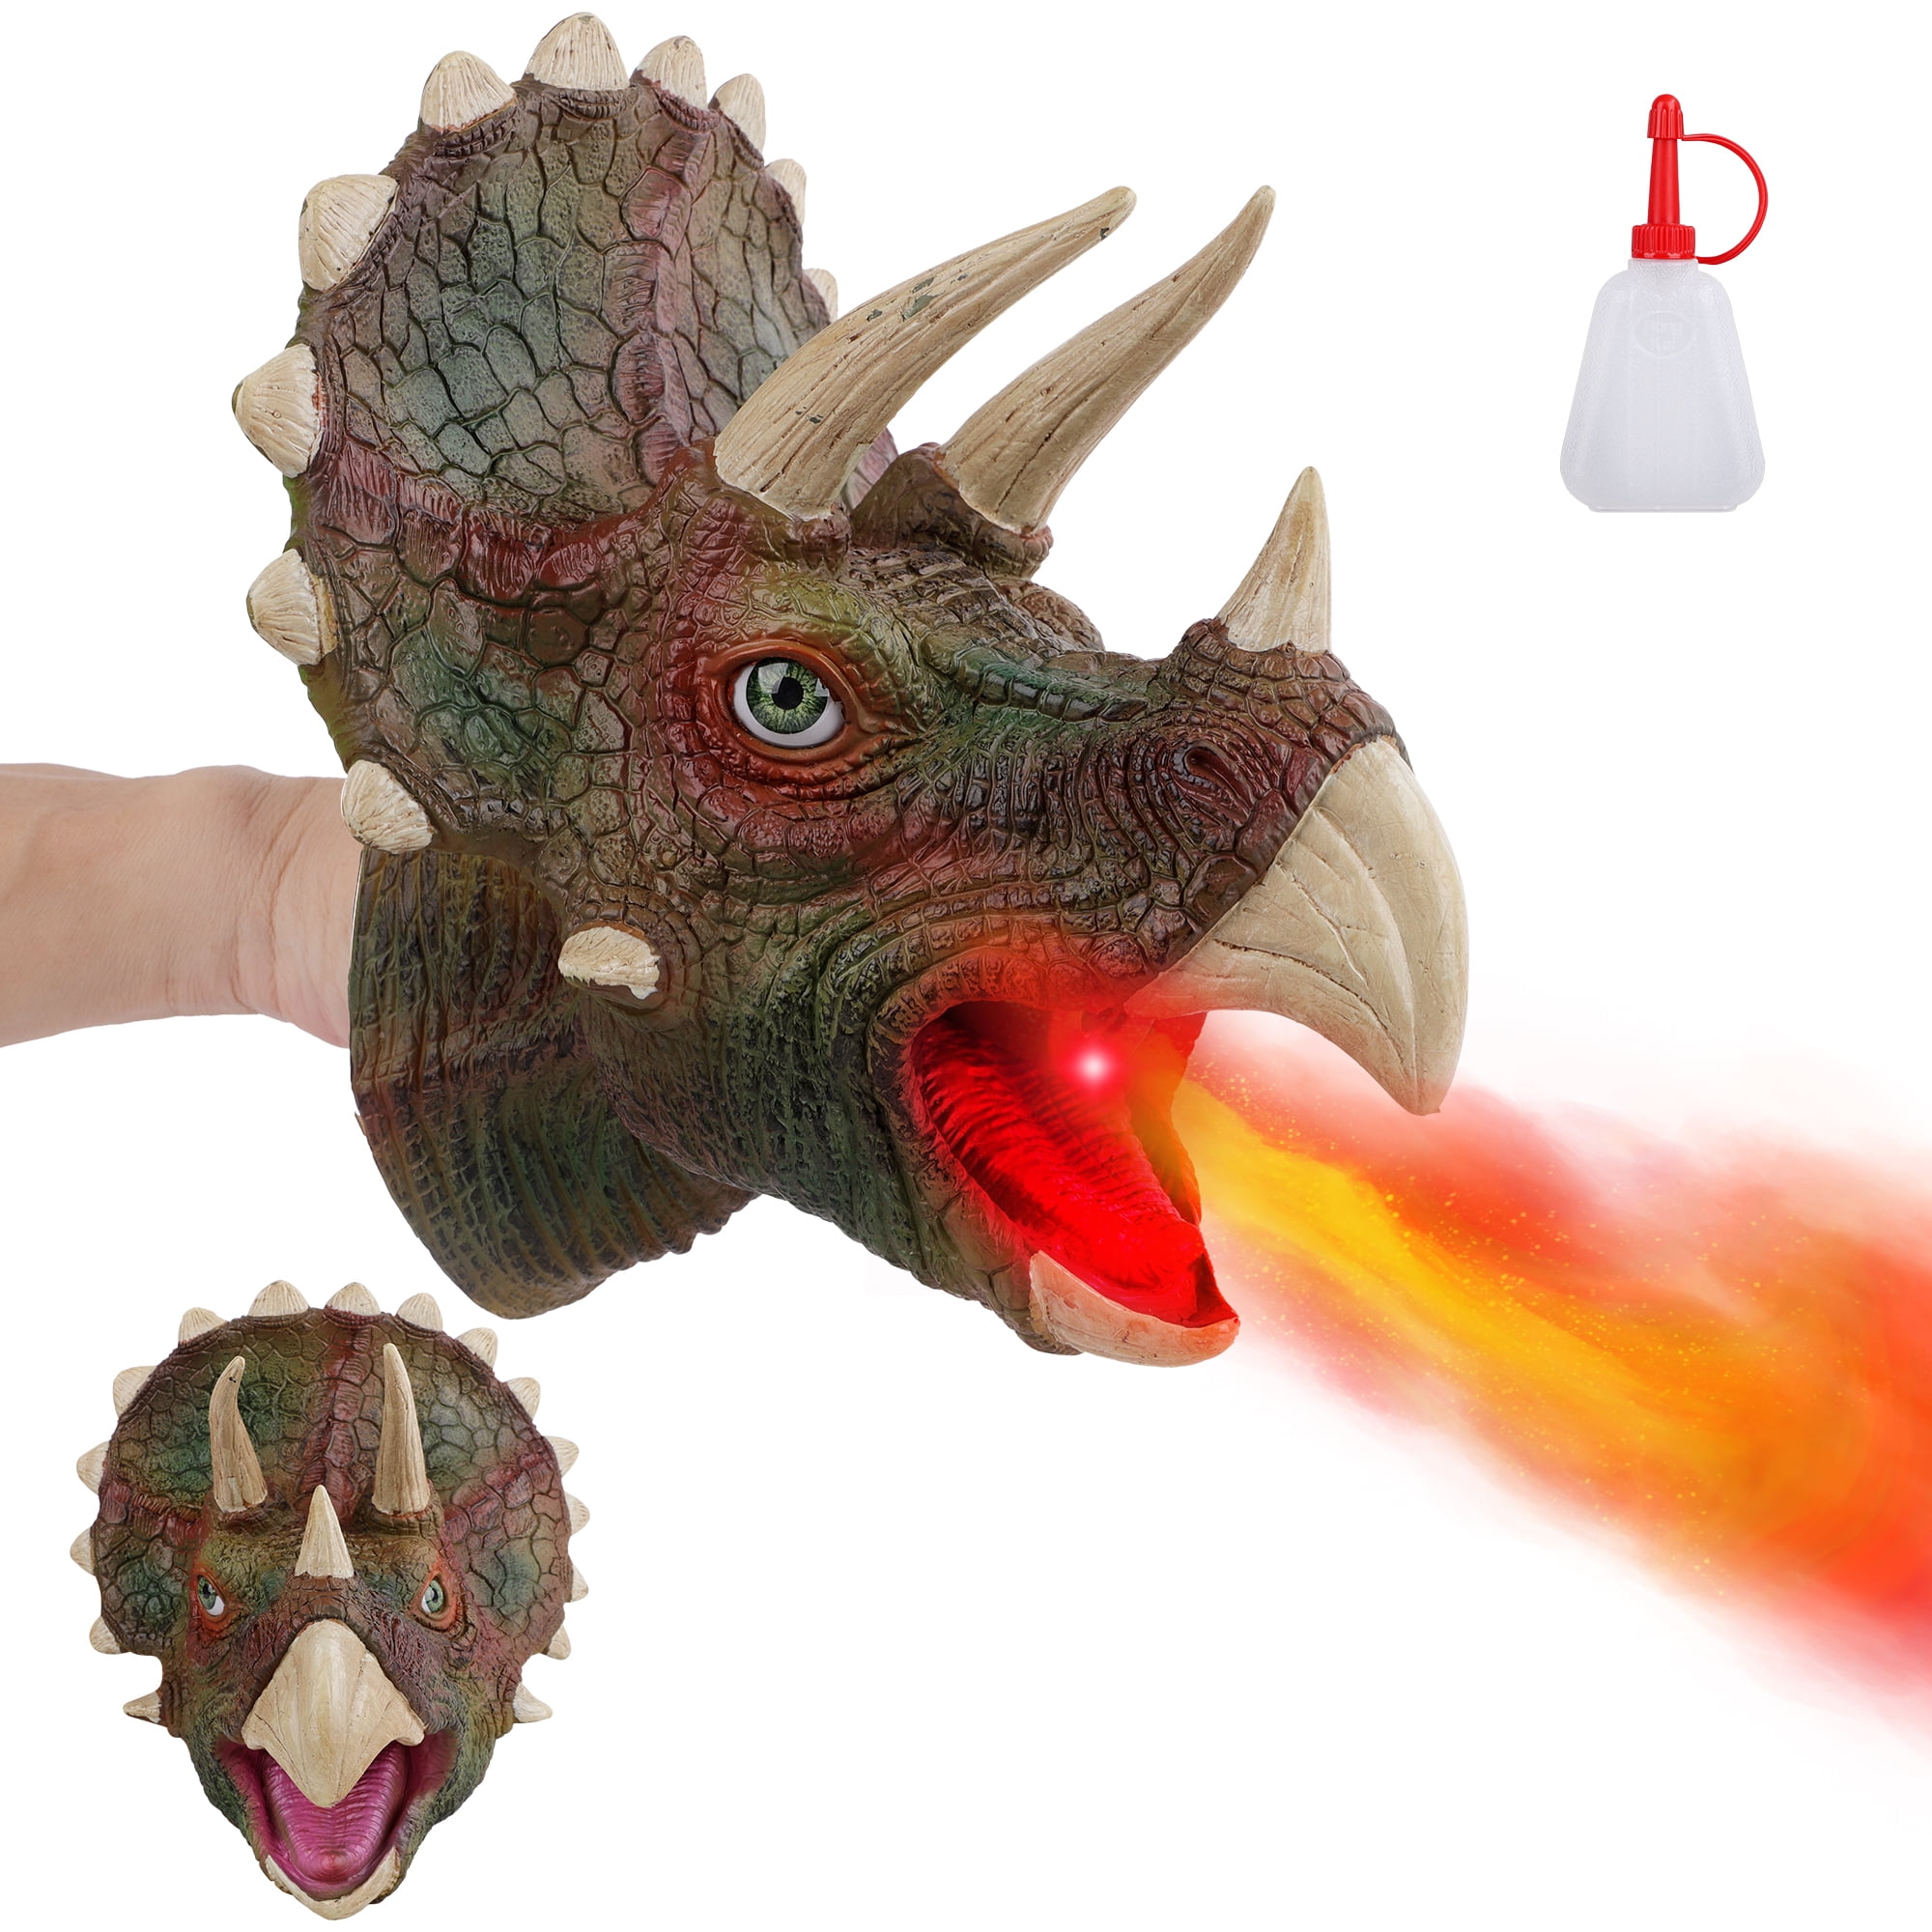 JURASSIC PARK Triceratops - Puppeteering an Animatronic Dinosaur